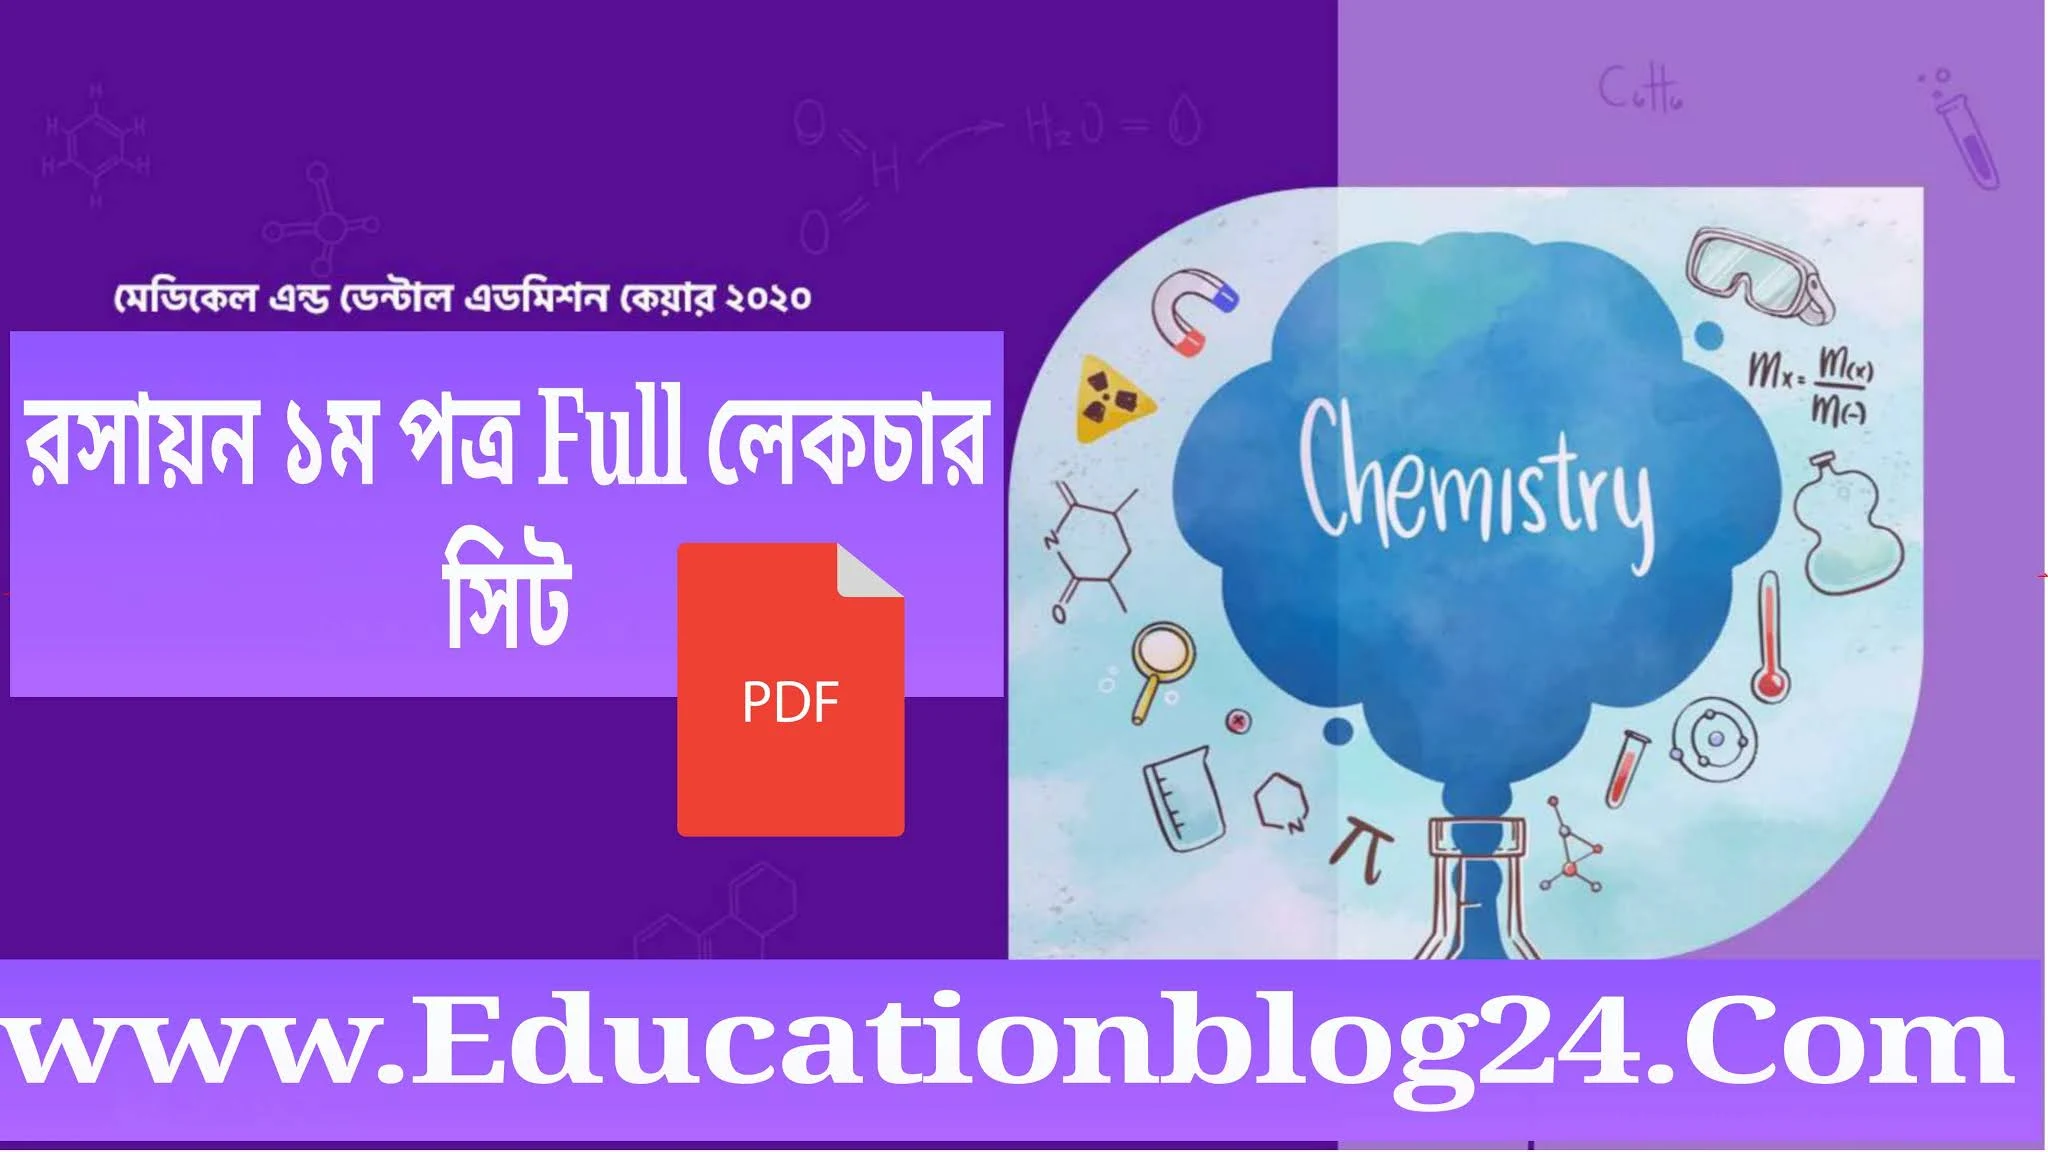 Udvash Online Class -Chemistry 1st Paper Pdf Download |উদ্ভাস রসায়ন ১ম পত্র লেকচার সিট Pdf Download